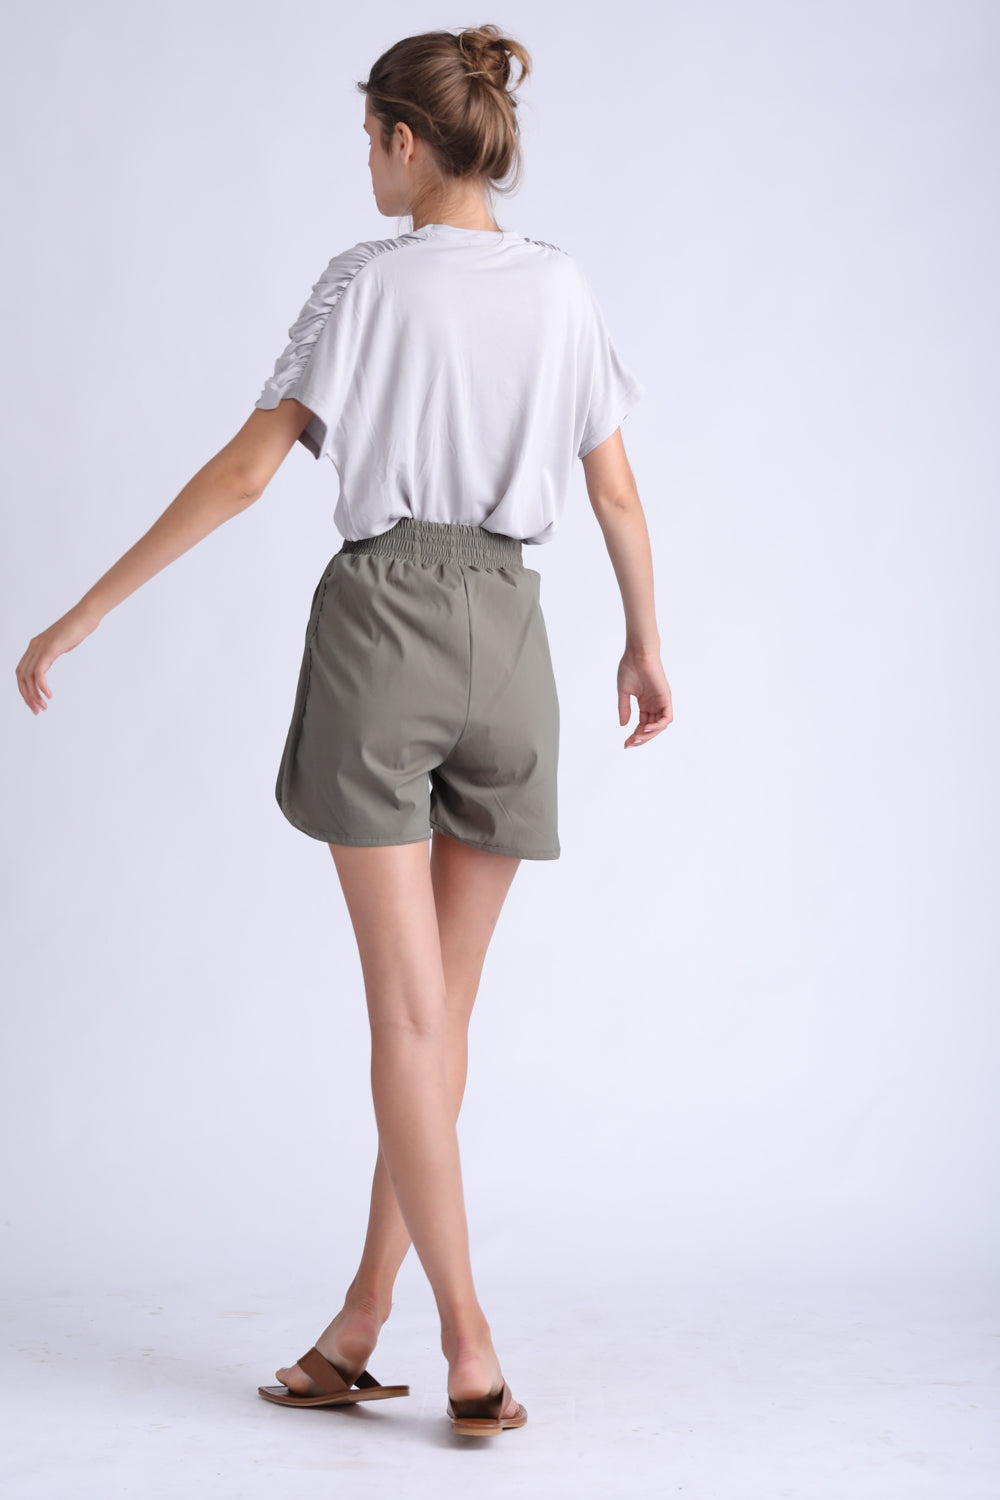 Buni's Olive Green Shorts